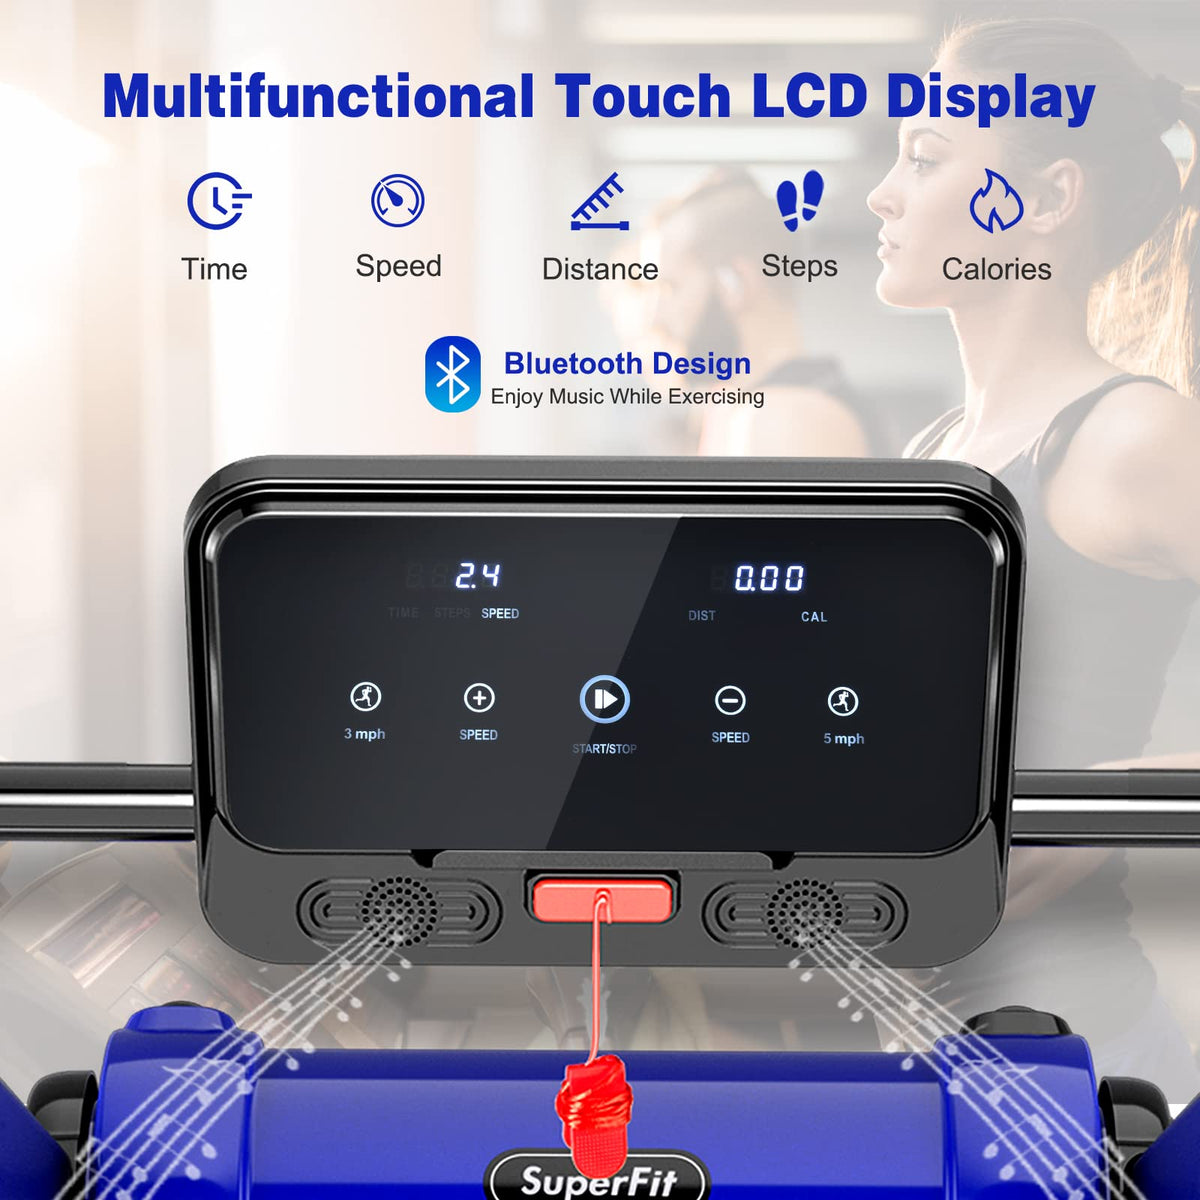 Foldable Electric Treadmill, 2.25 HP Running Machine W/LED Display, APP Control & Bluetooth Speaker